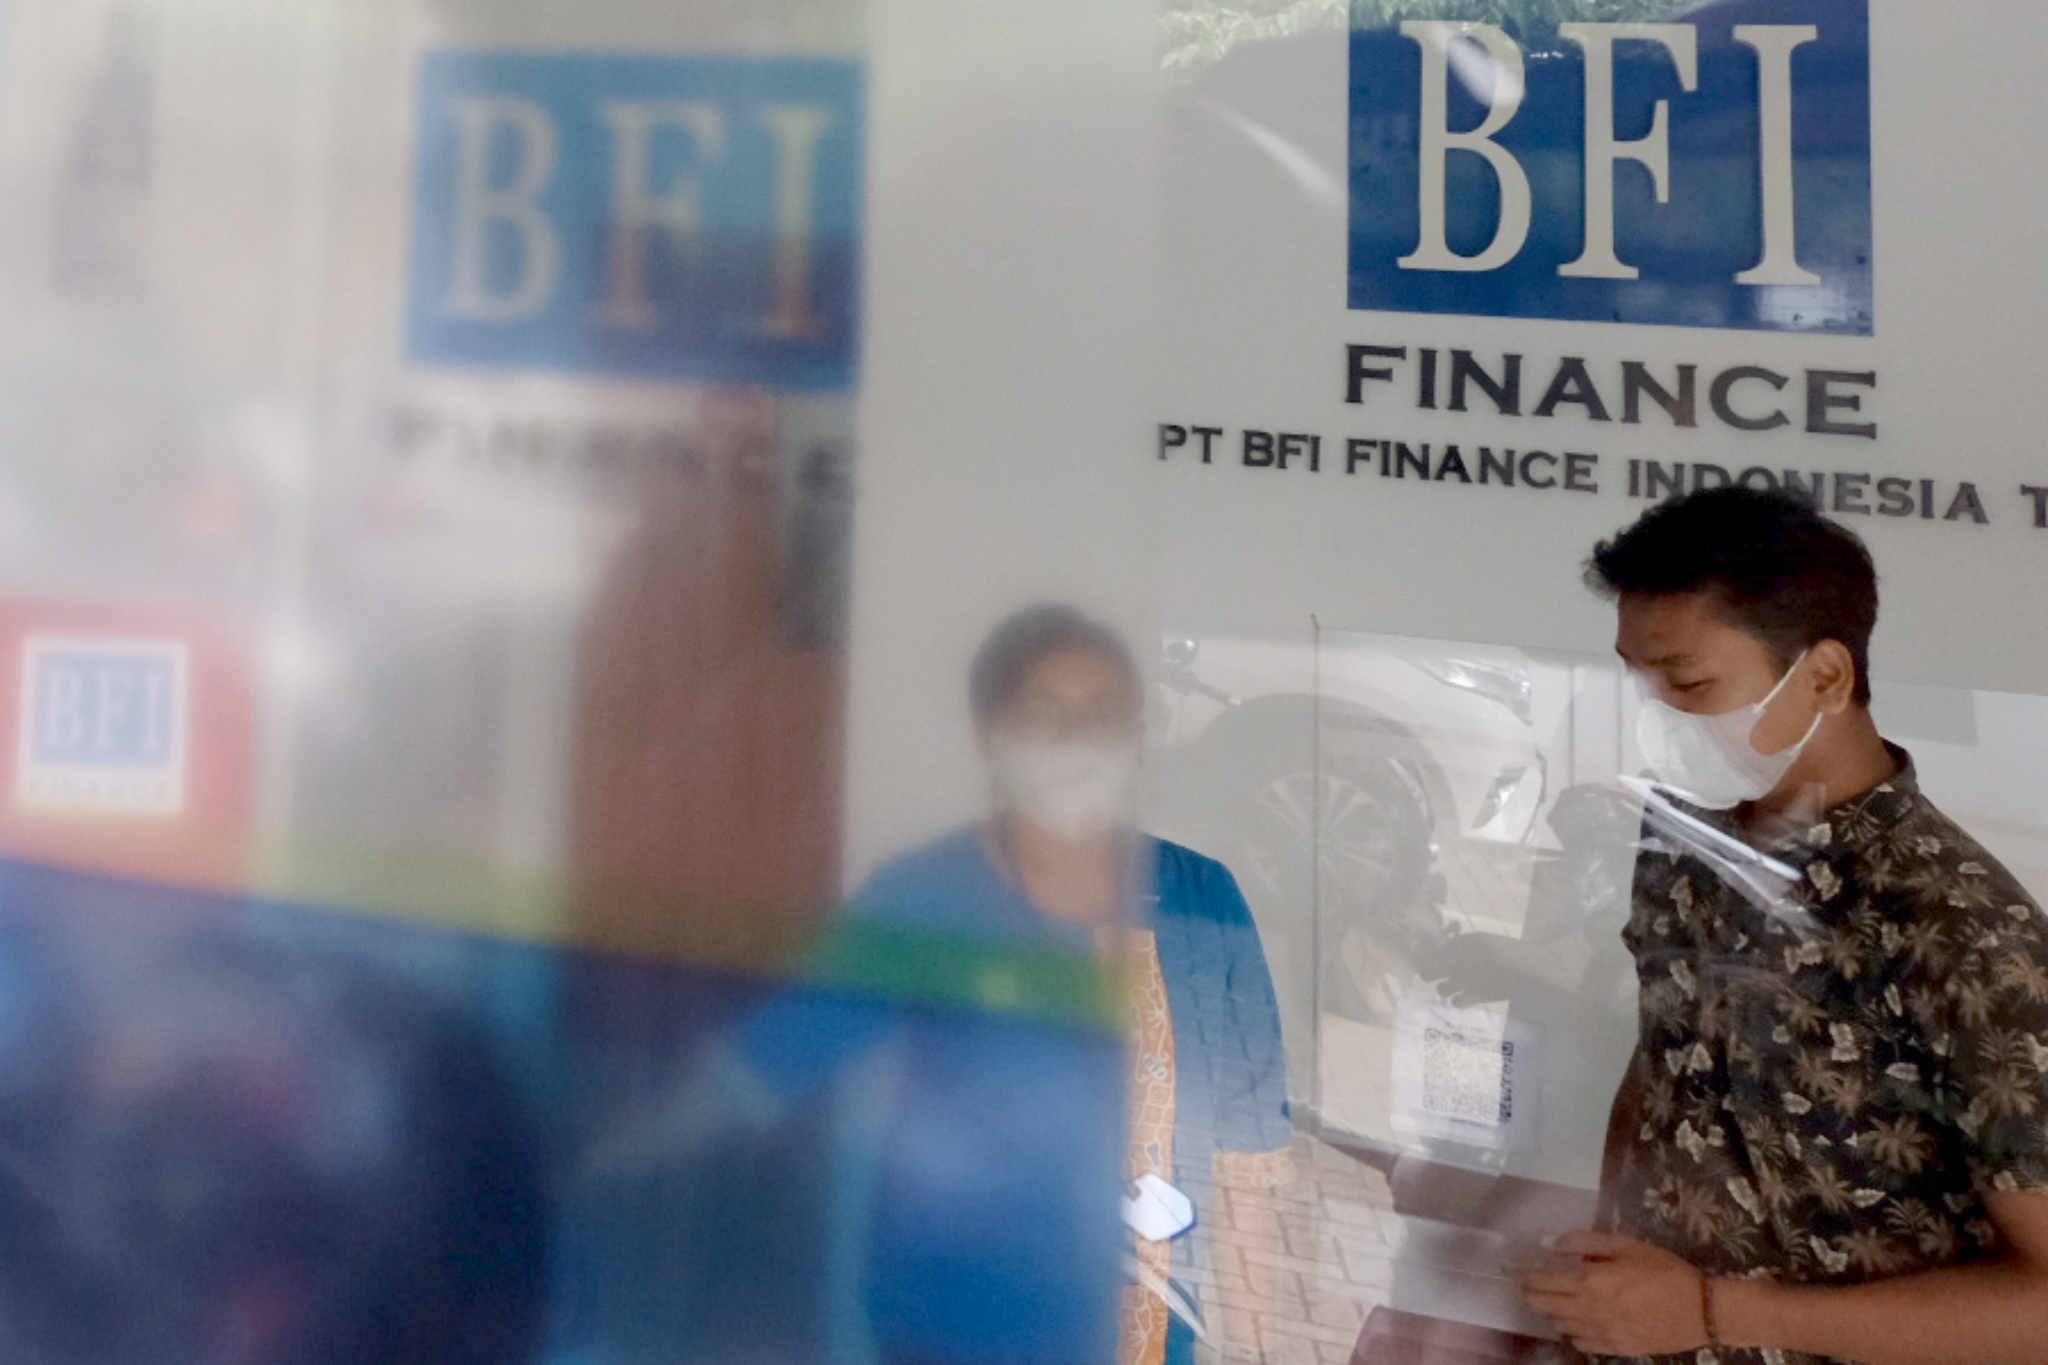 <p>Karyawati melayani nasabah di kantor cabang BFI Finance Pondok Pinang, Jakarta Selatan, Senin, 7 Juni 2021. Foto: Ismail Pohan/TrenAsia</p>
